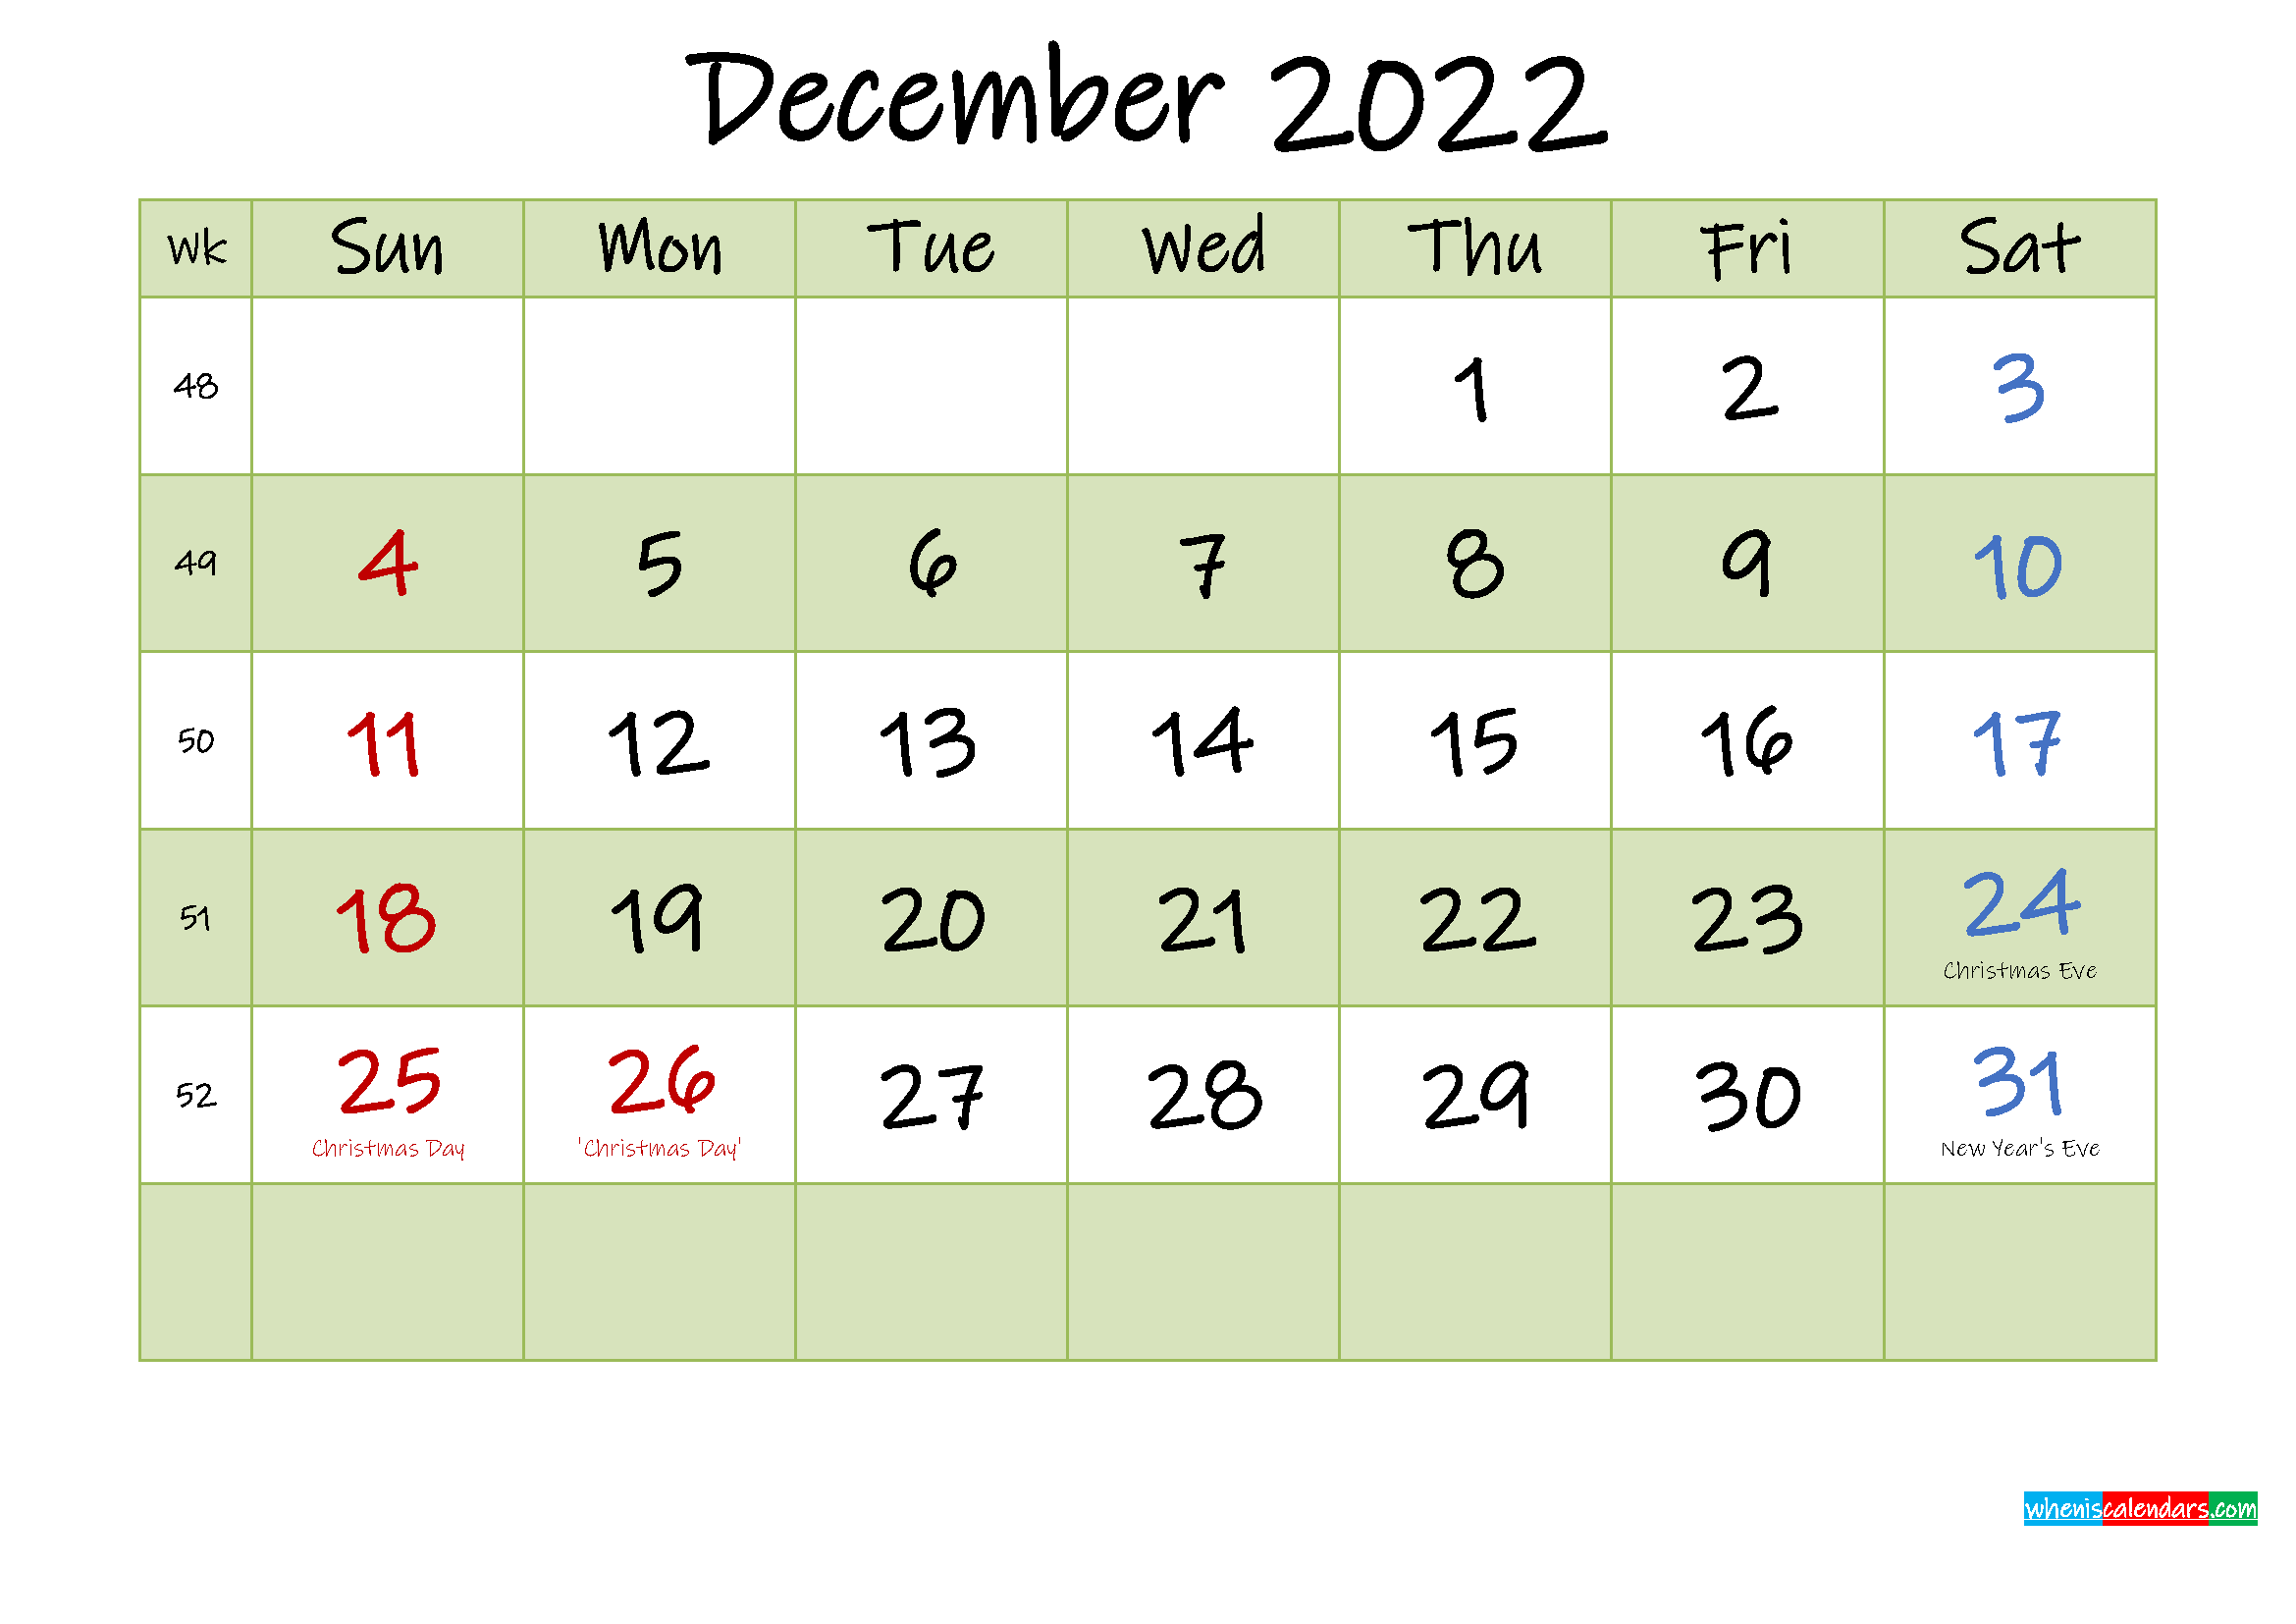 december-2022-calendar-with-holidays